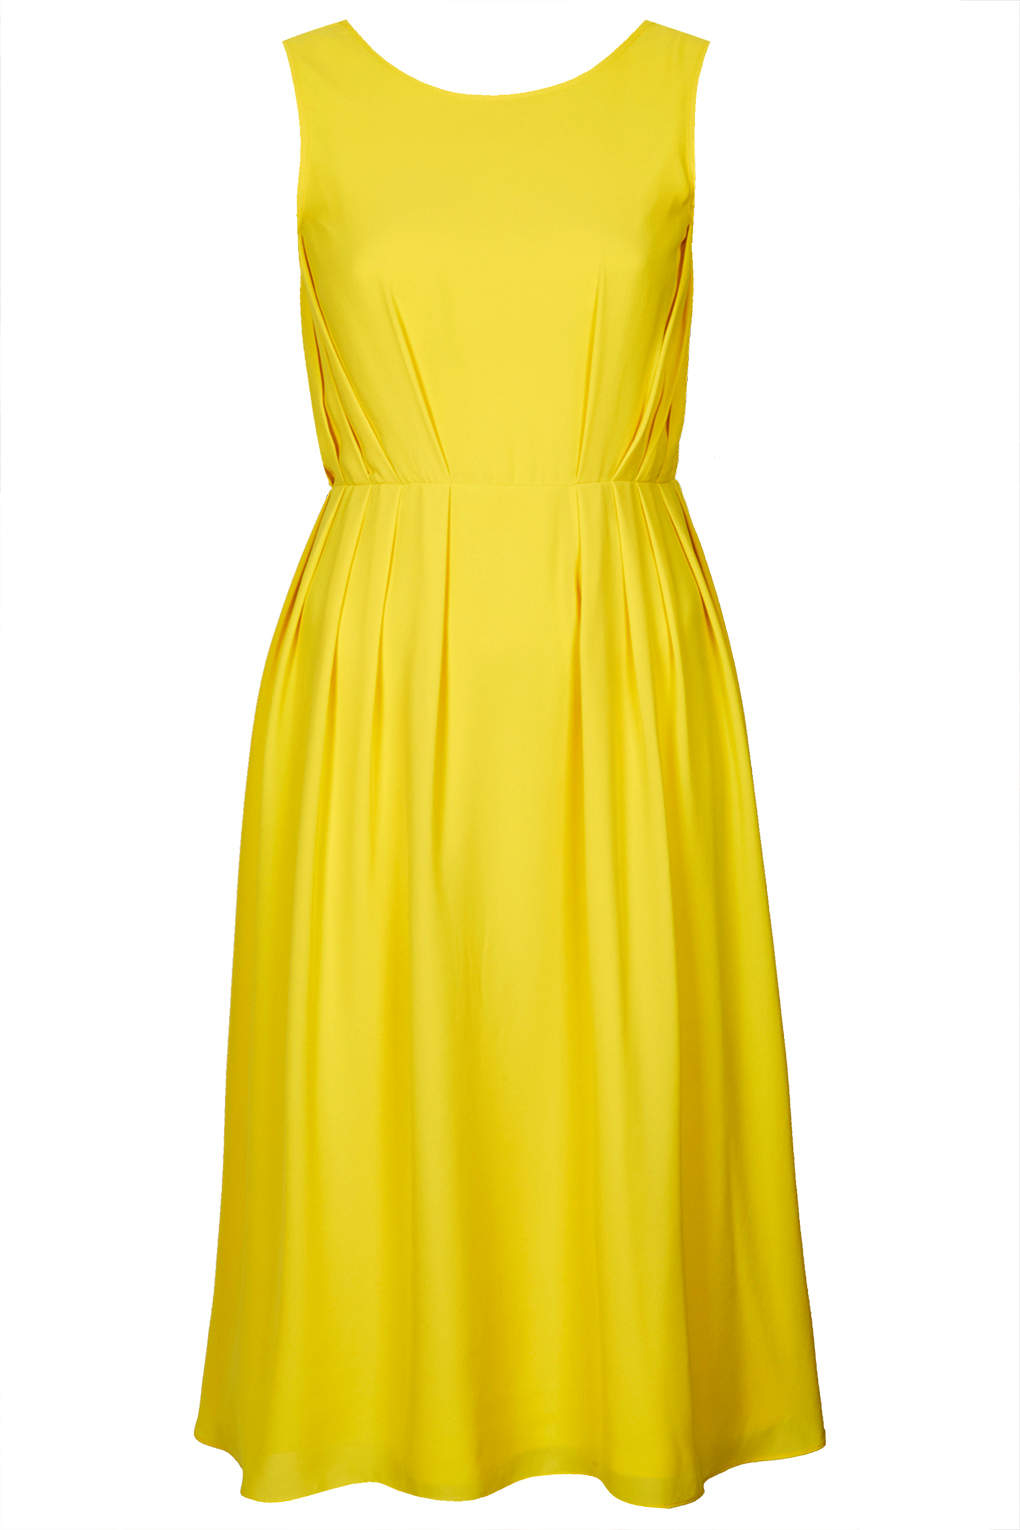 Topshop Pasha Poppy Midi Dress in Yellow | Lyst